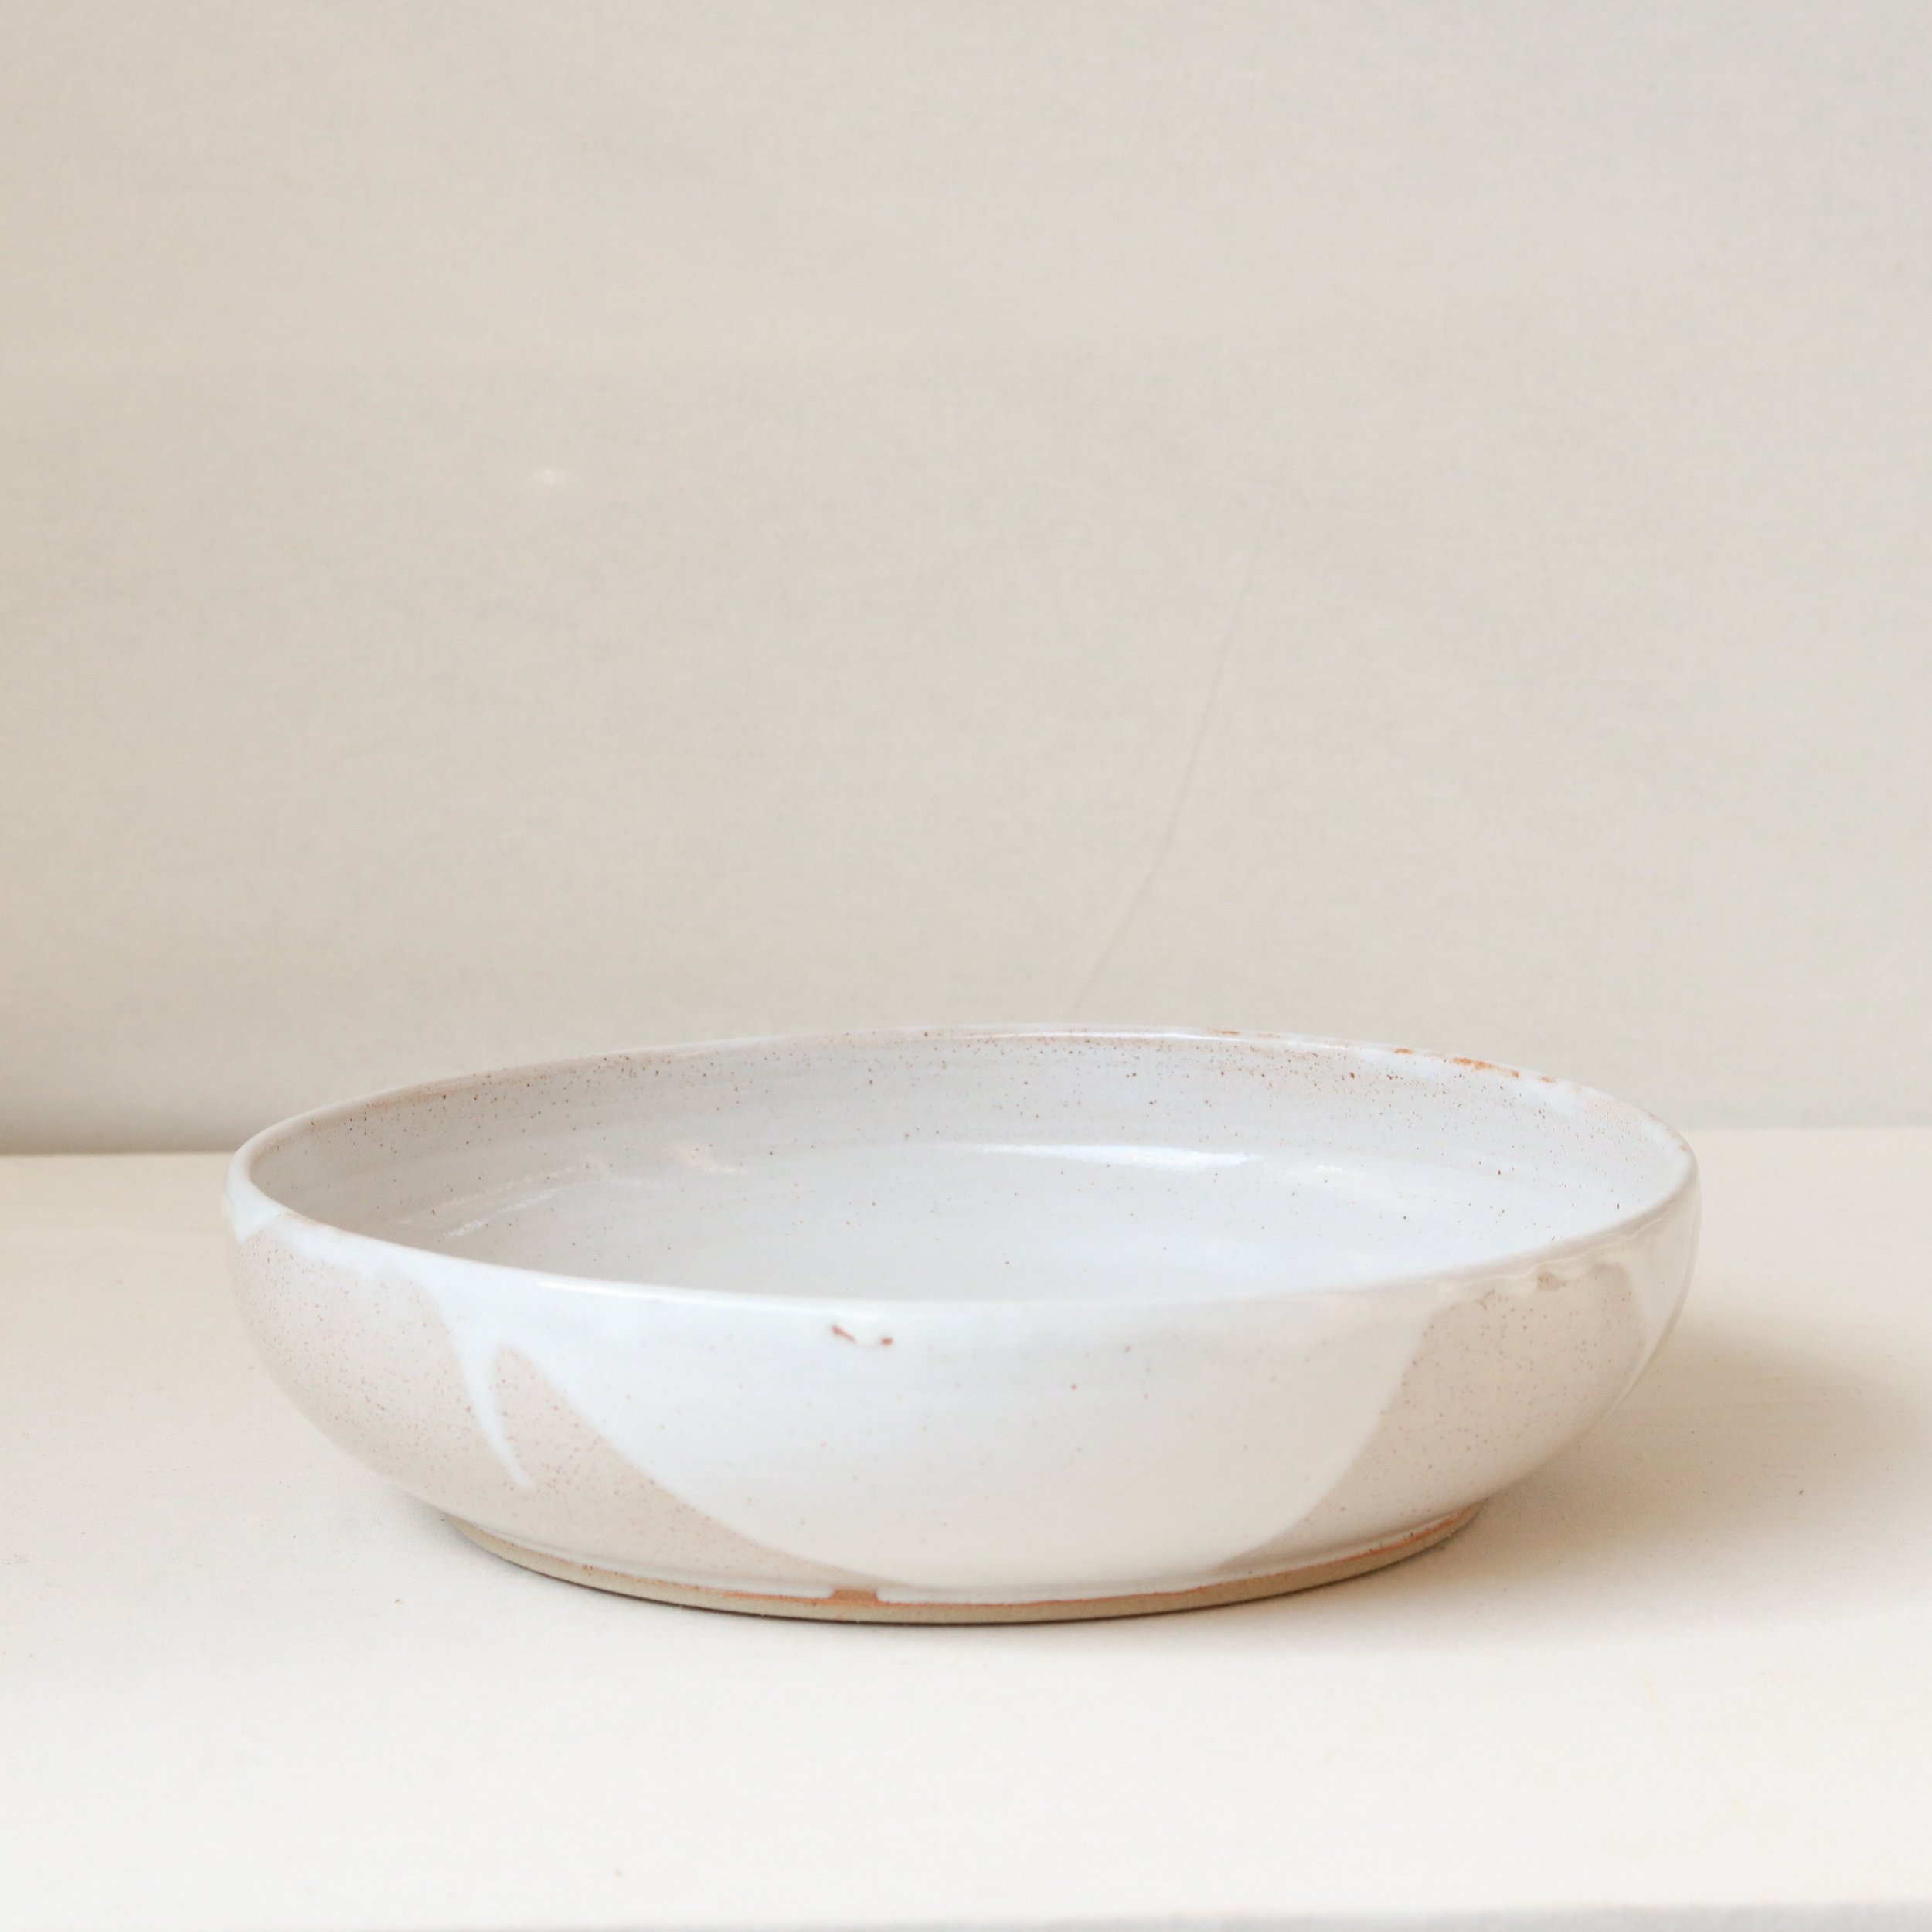 Serving Bowl in Speckled White, Flecked Stoneware-3.jpg